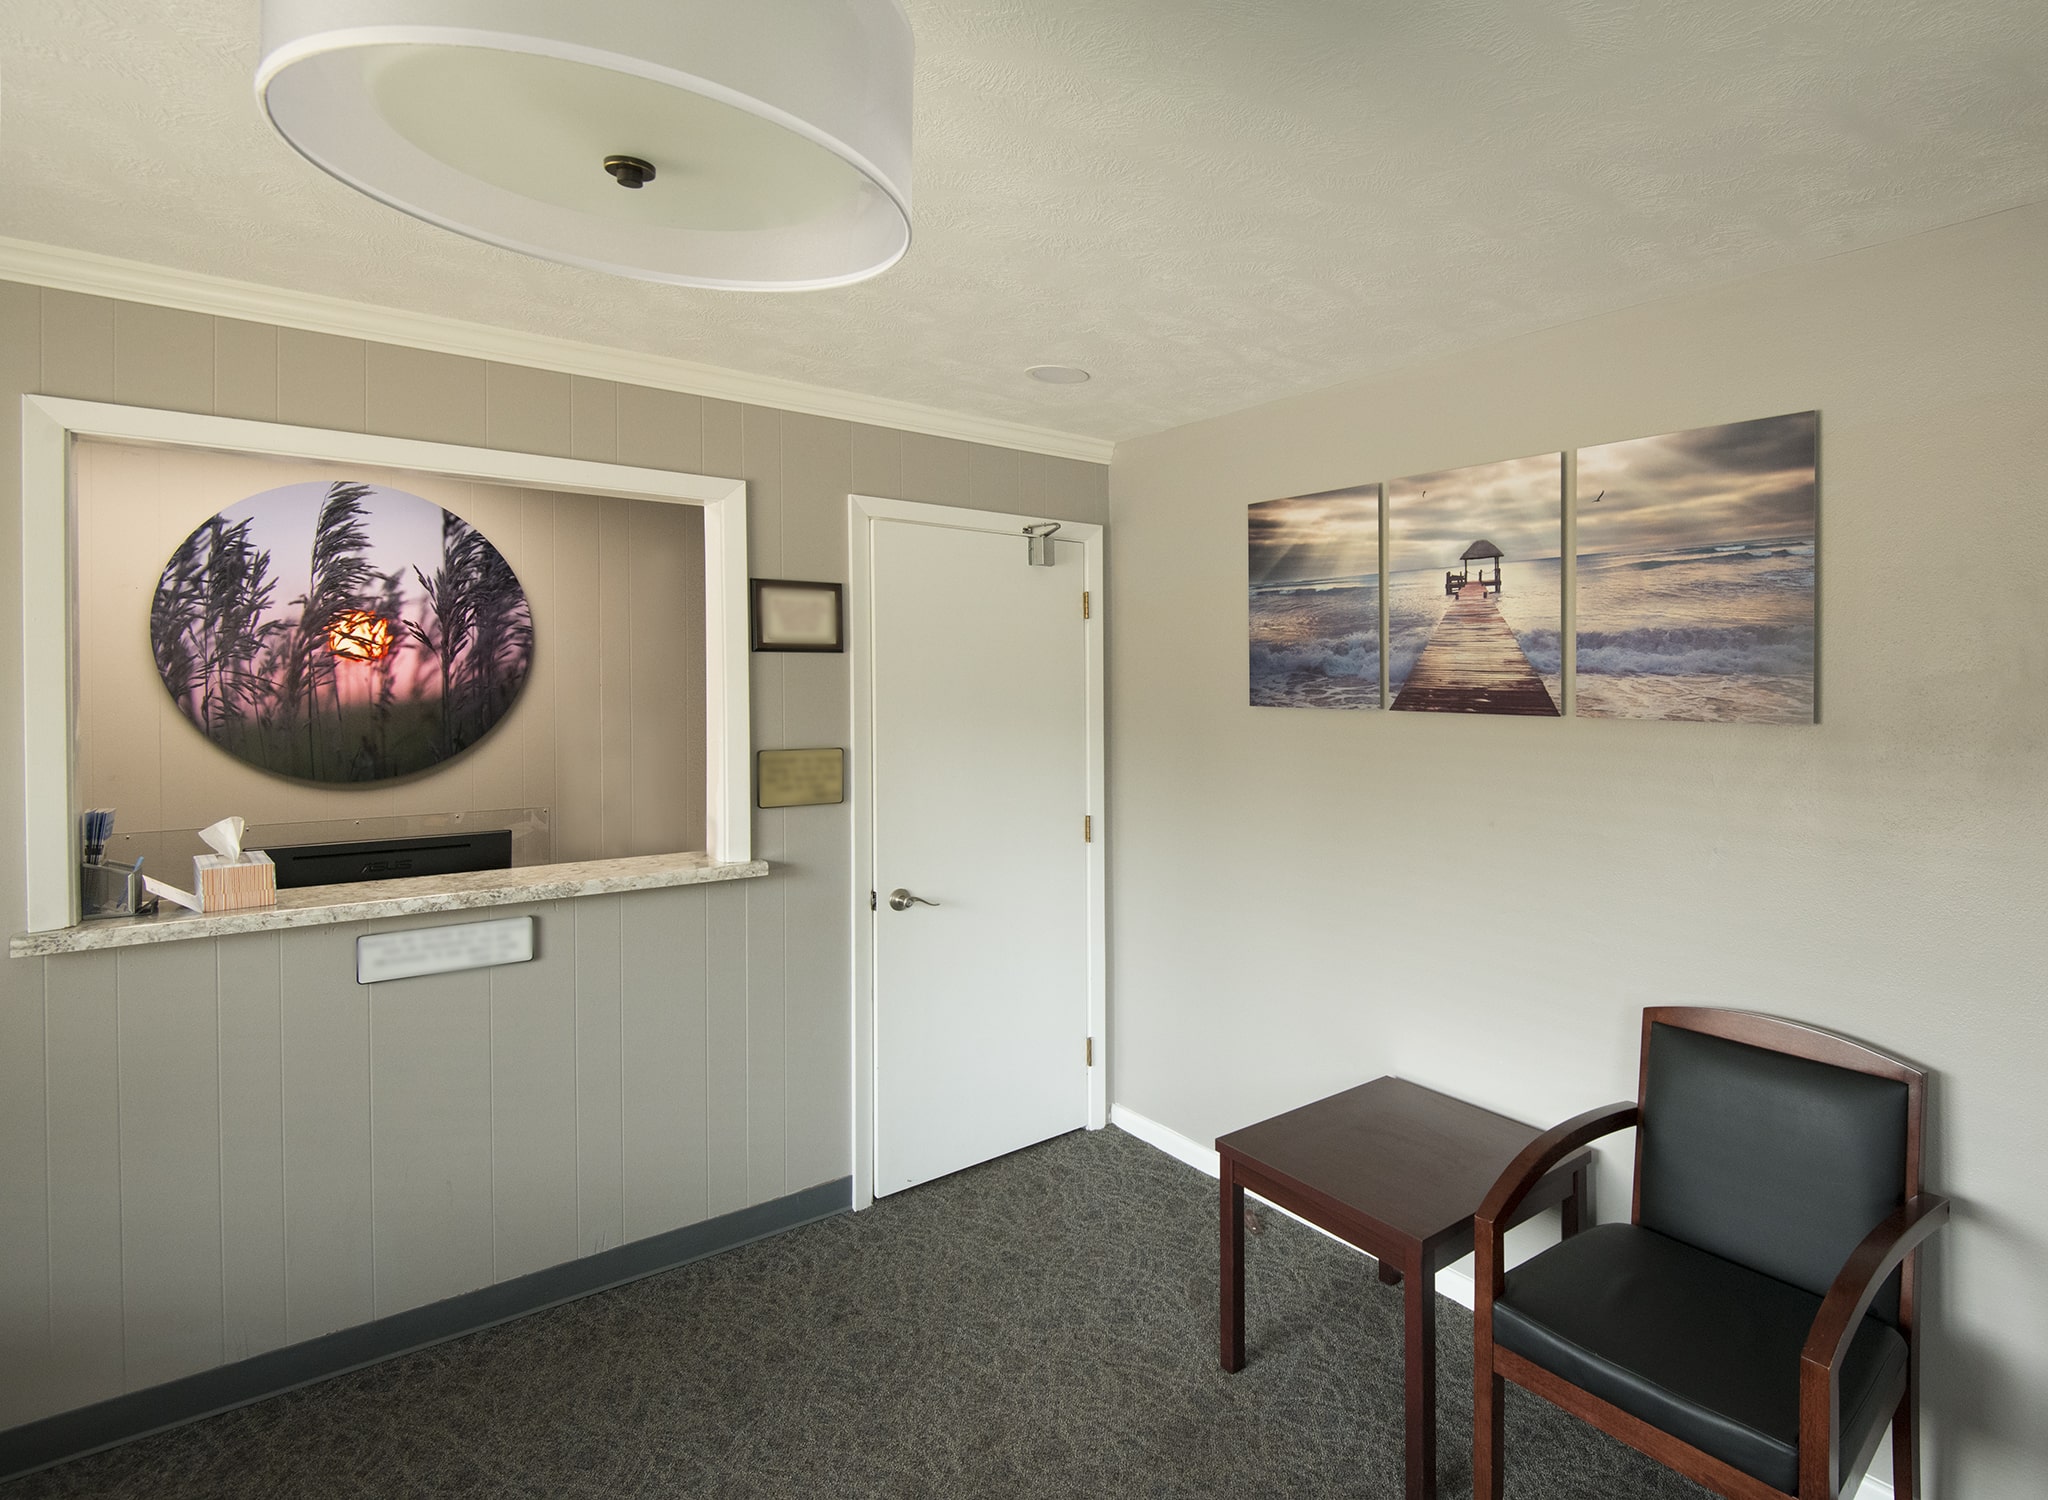 3-Panel Artwork in Reception Area